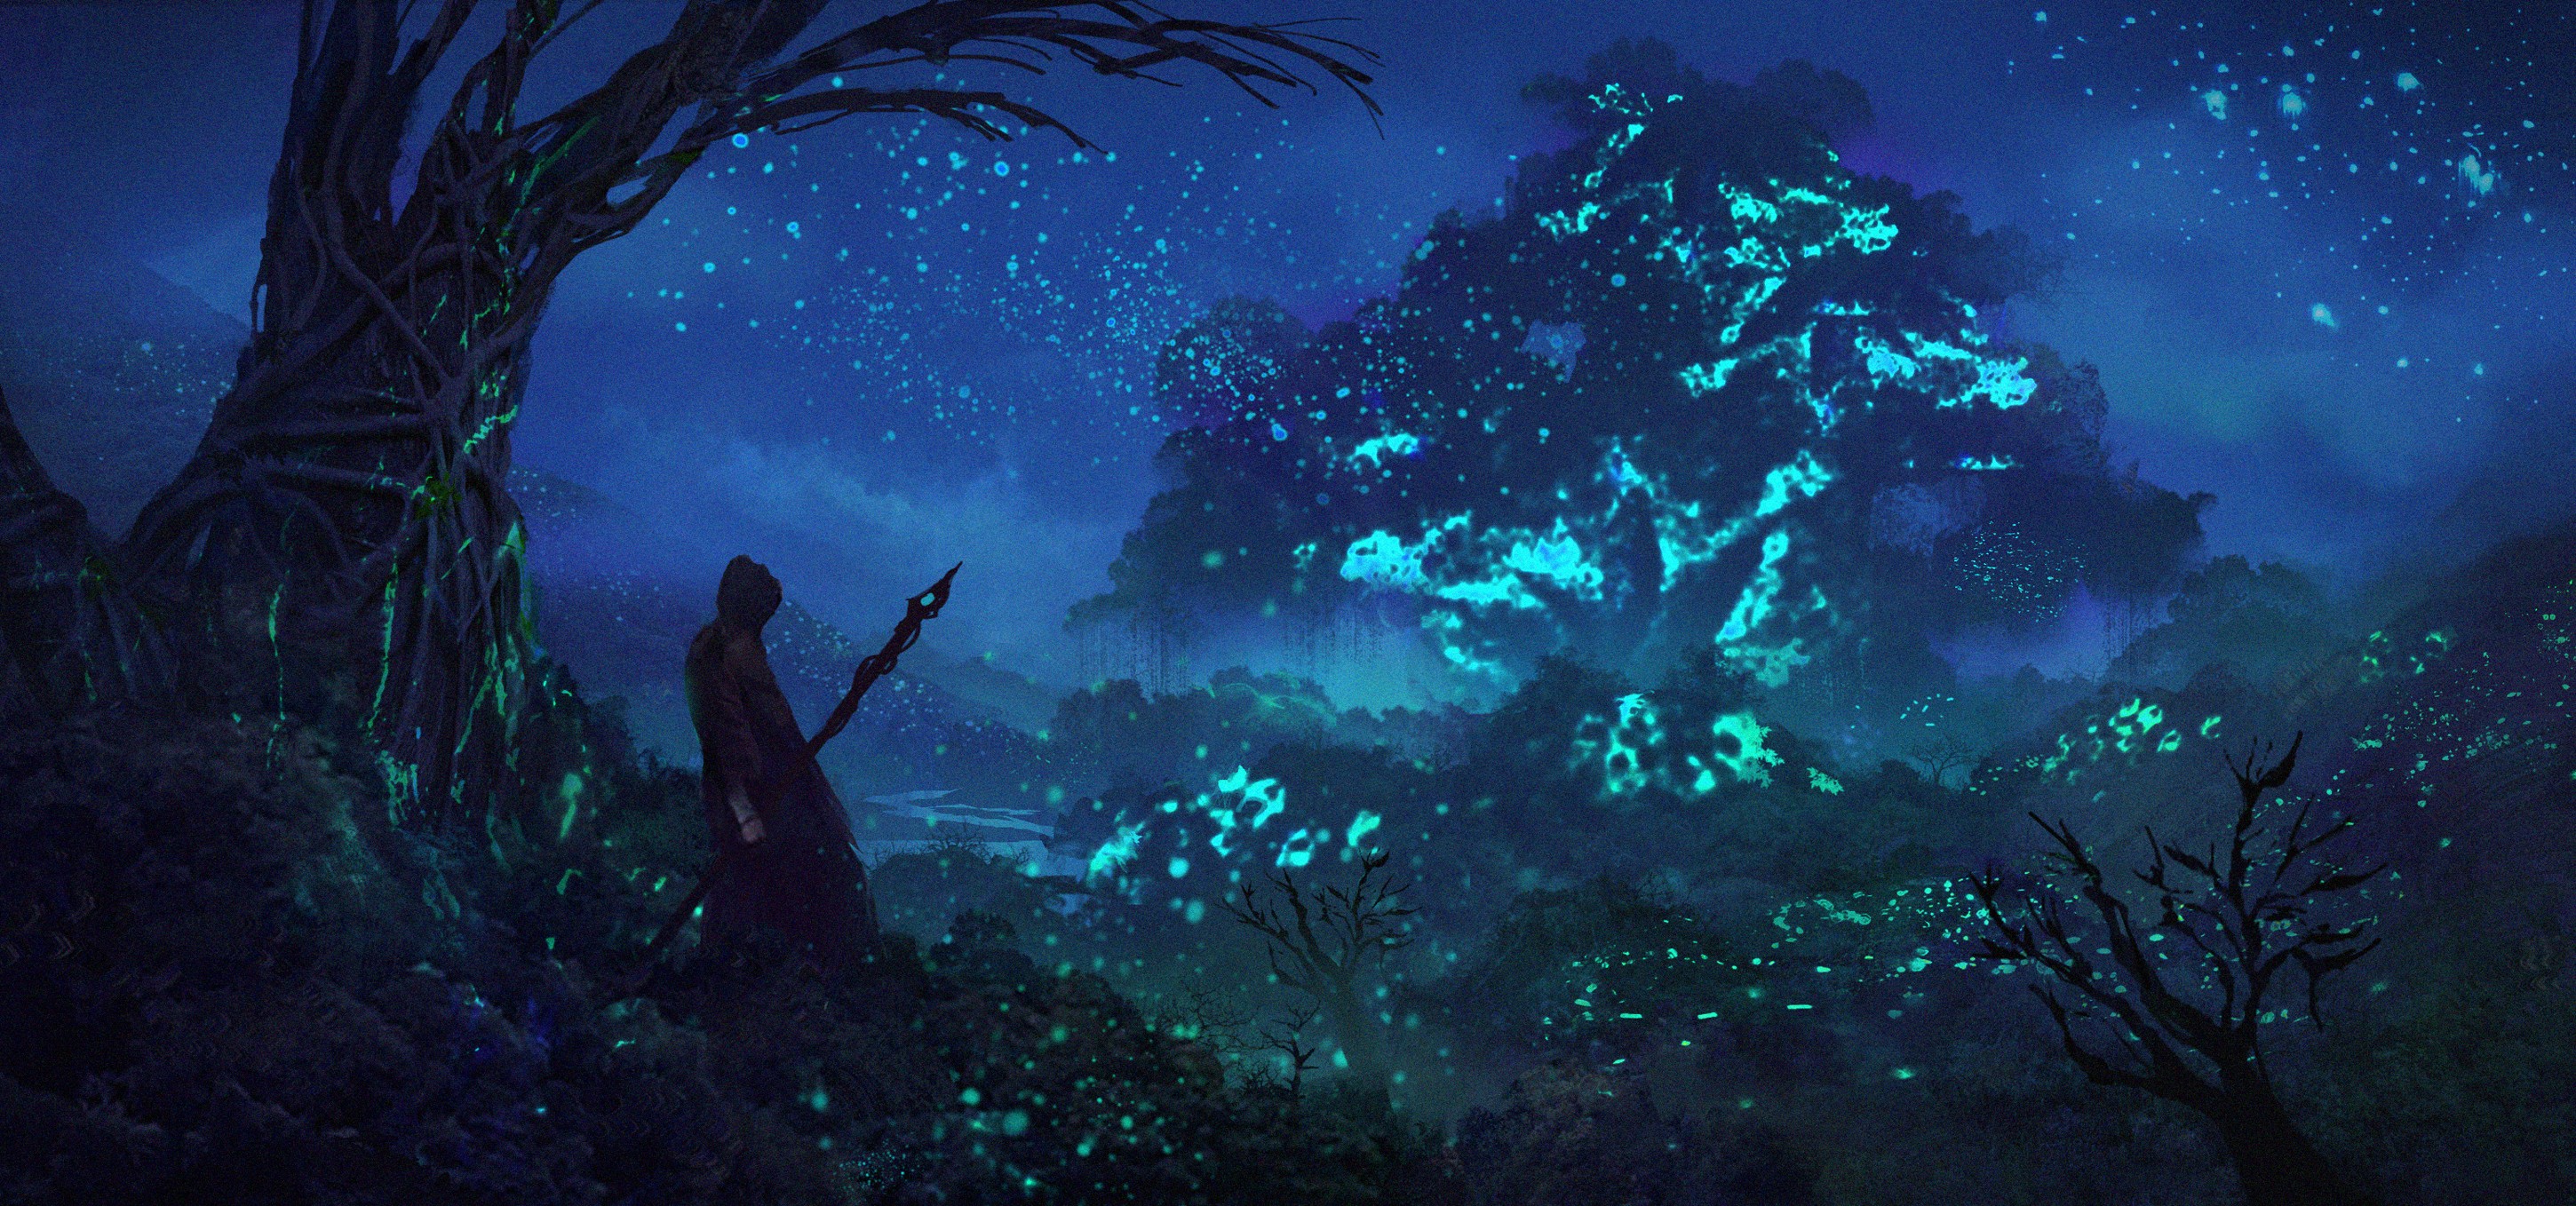 http://wallup.net/wp-content/uploads/2017/05/29/380110-warrior-fantasy_art-magic-night-trees-blue.jpg